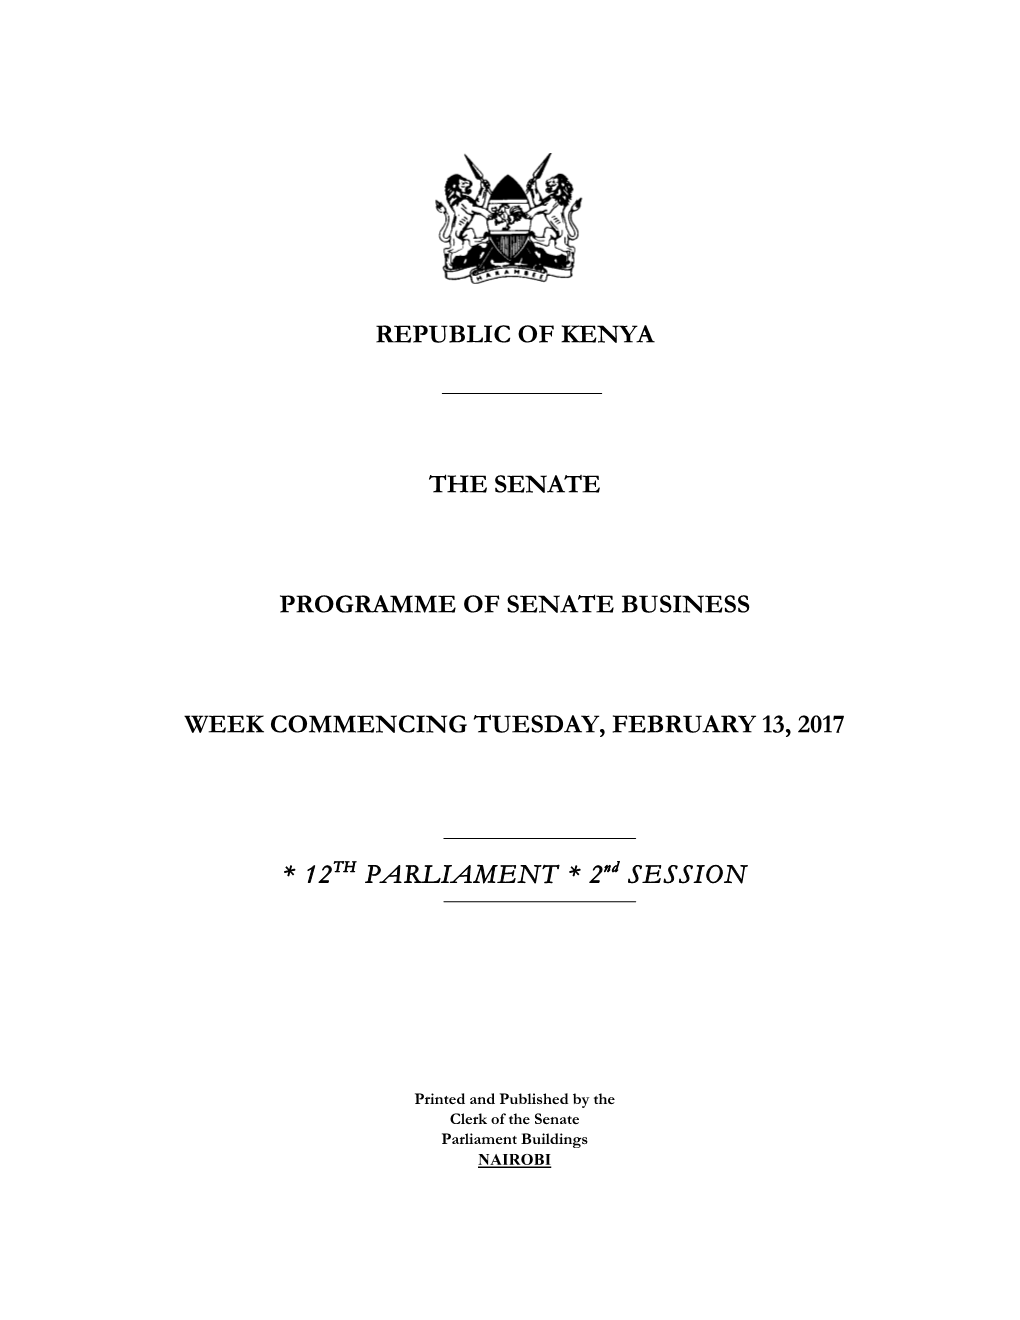 Republic of Kenya the Senate Programme of Senate